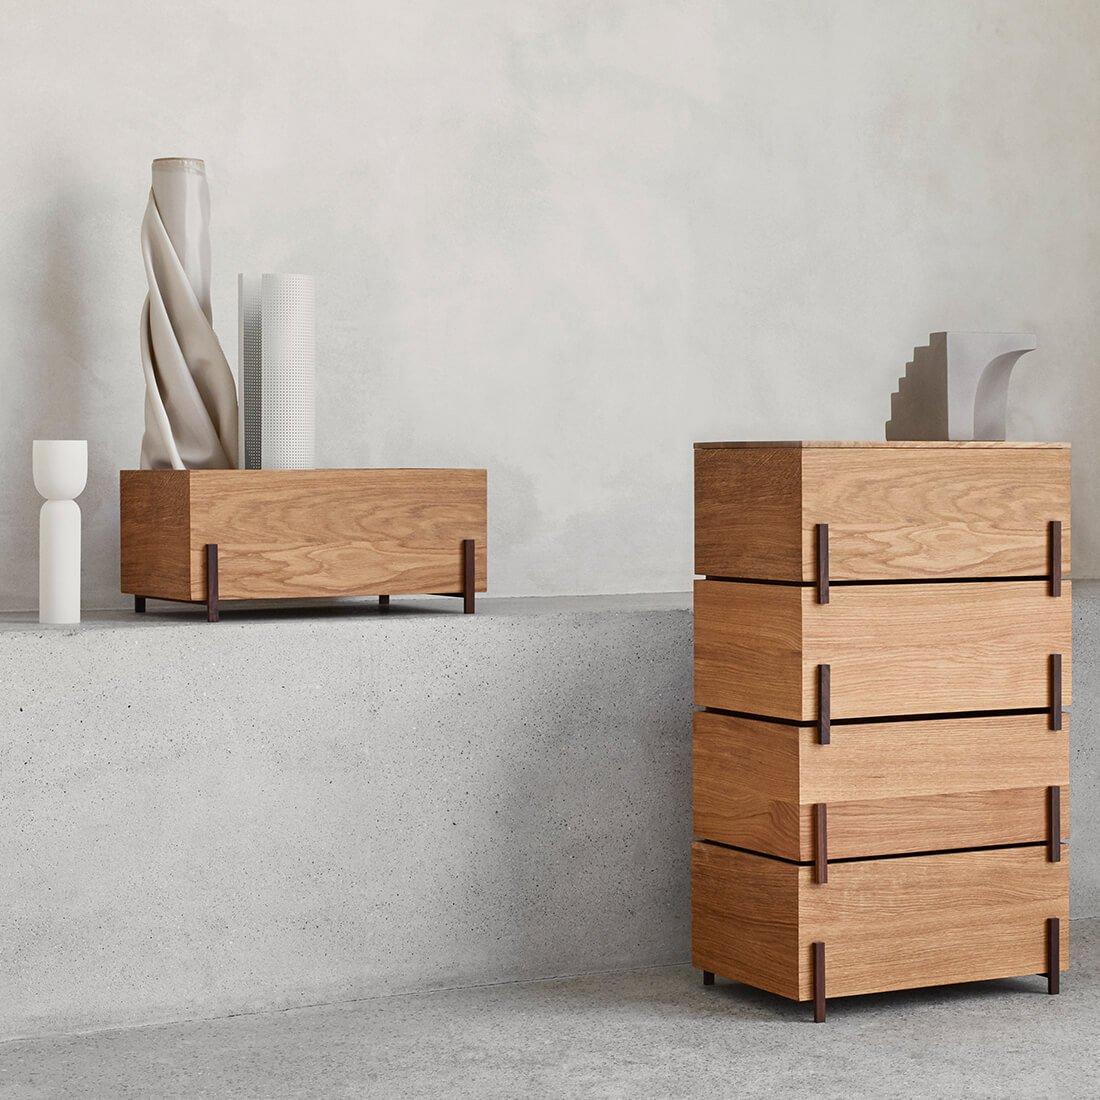 Danish Set of 3 Stack Storage Box by Kristina Dam Studio